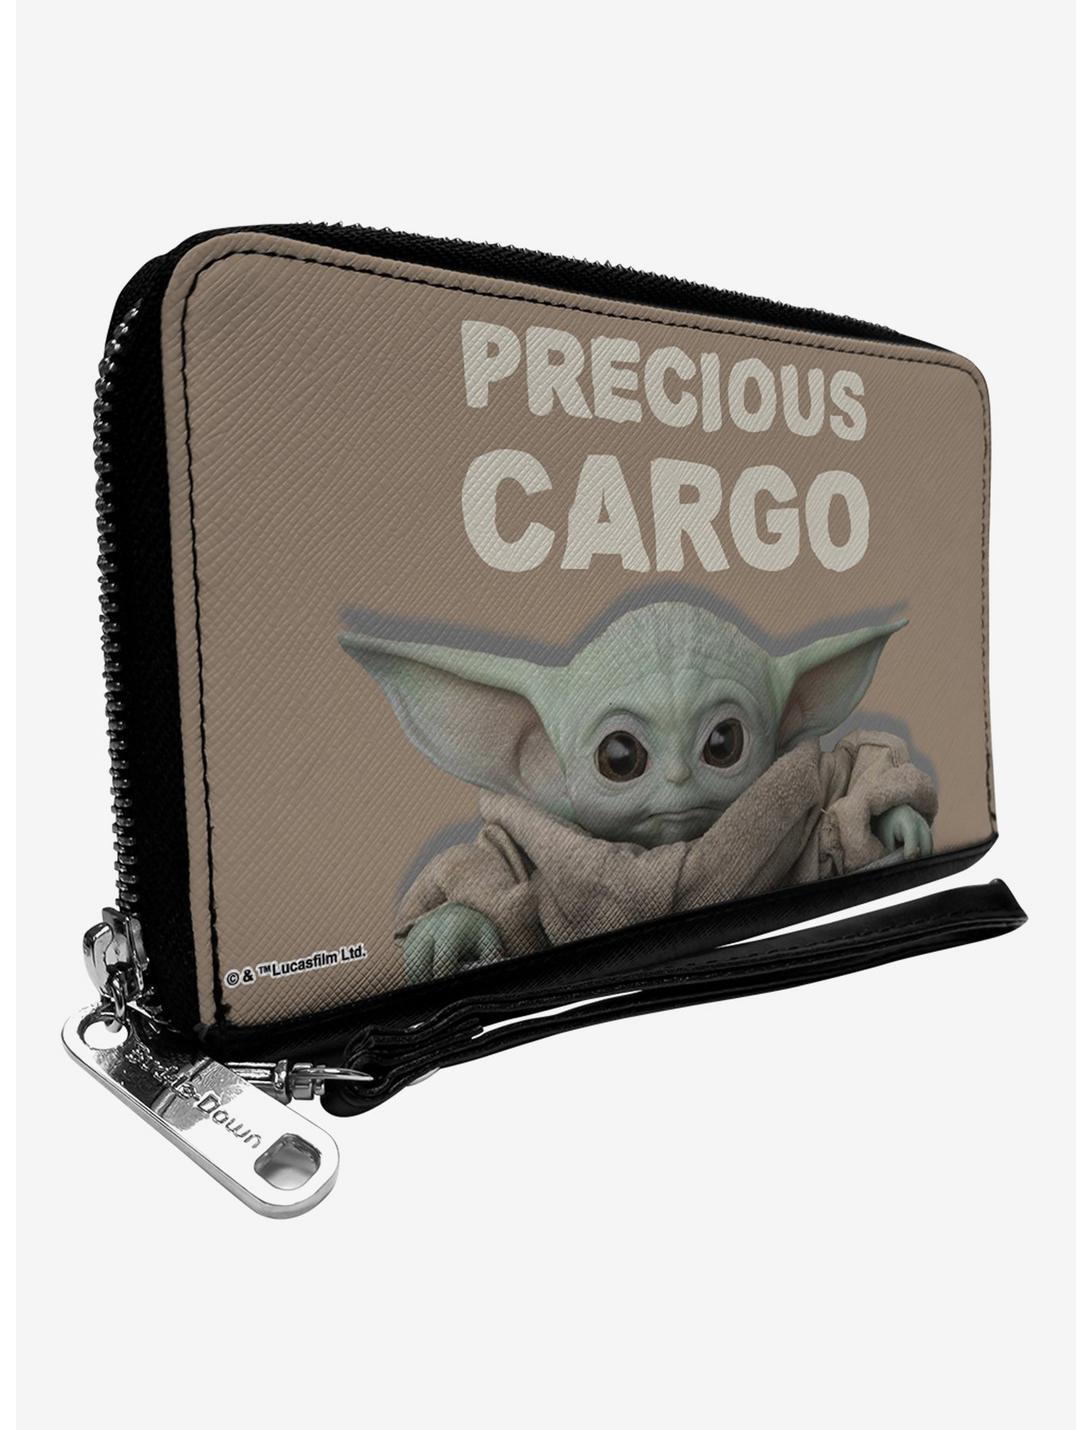 Star Wars Mandalorian The Child Baby Yoda Precious Cargo Kids Cap NWT Disney 